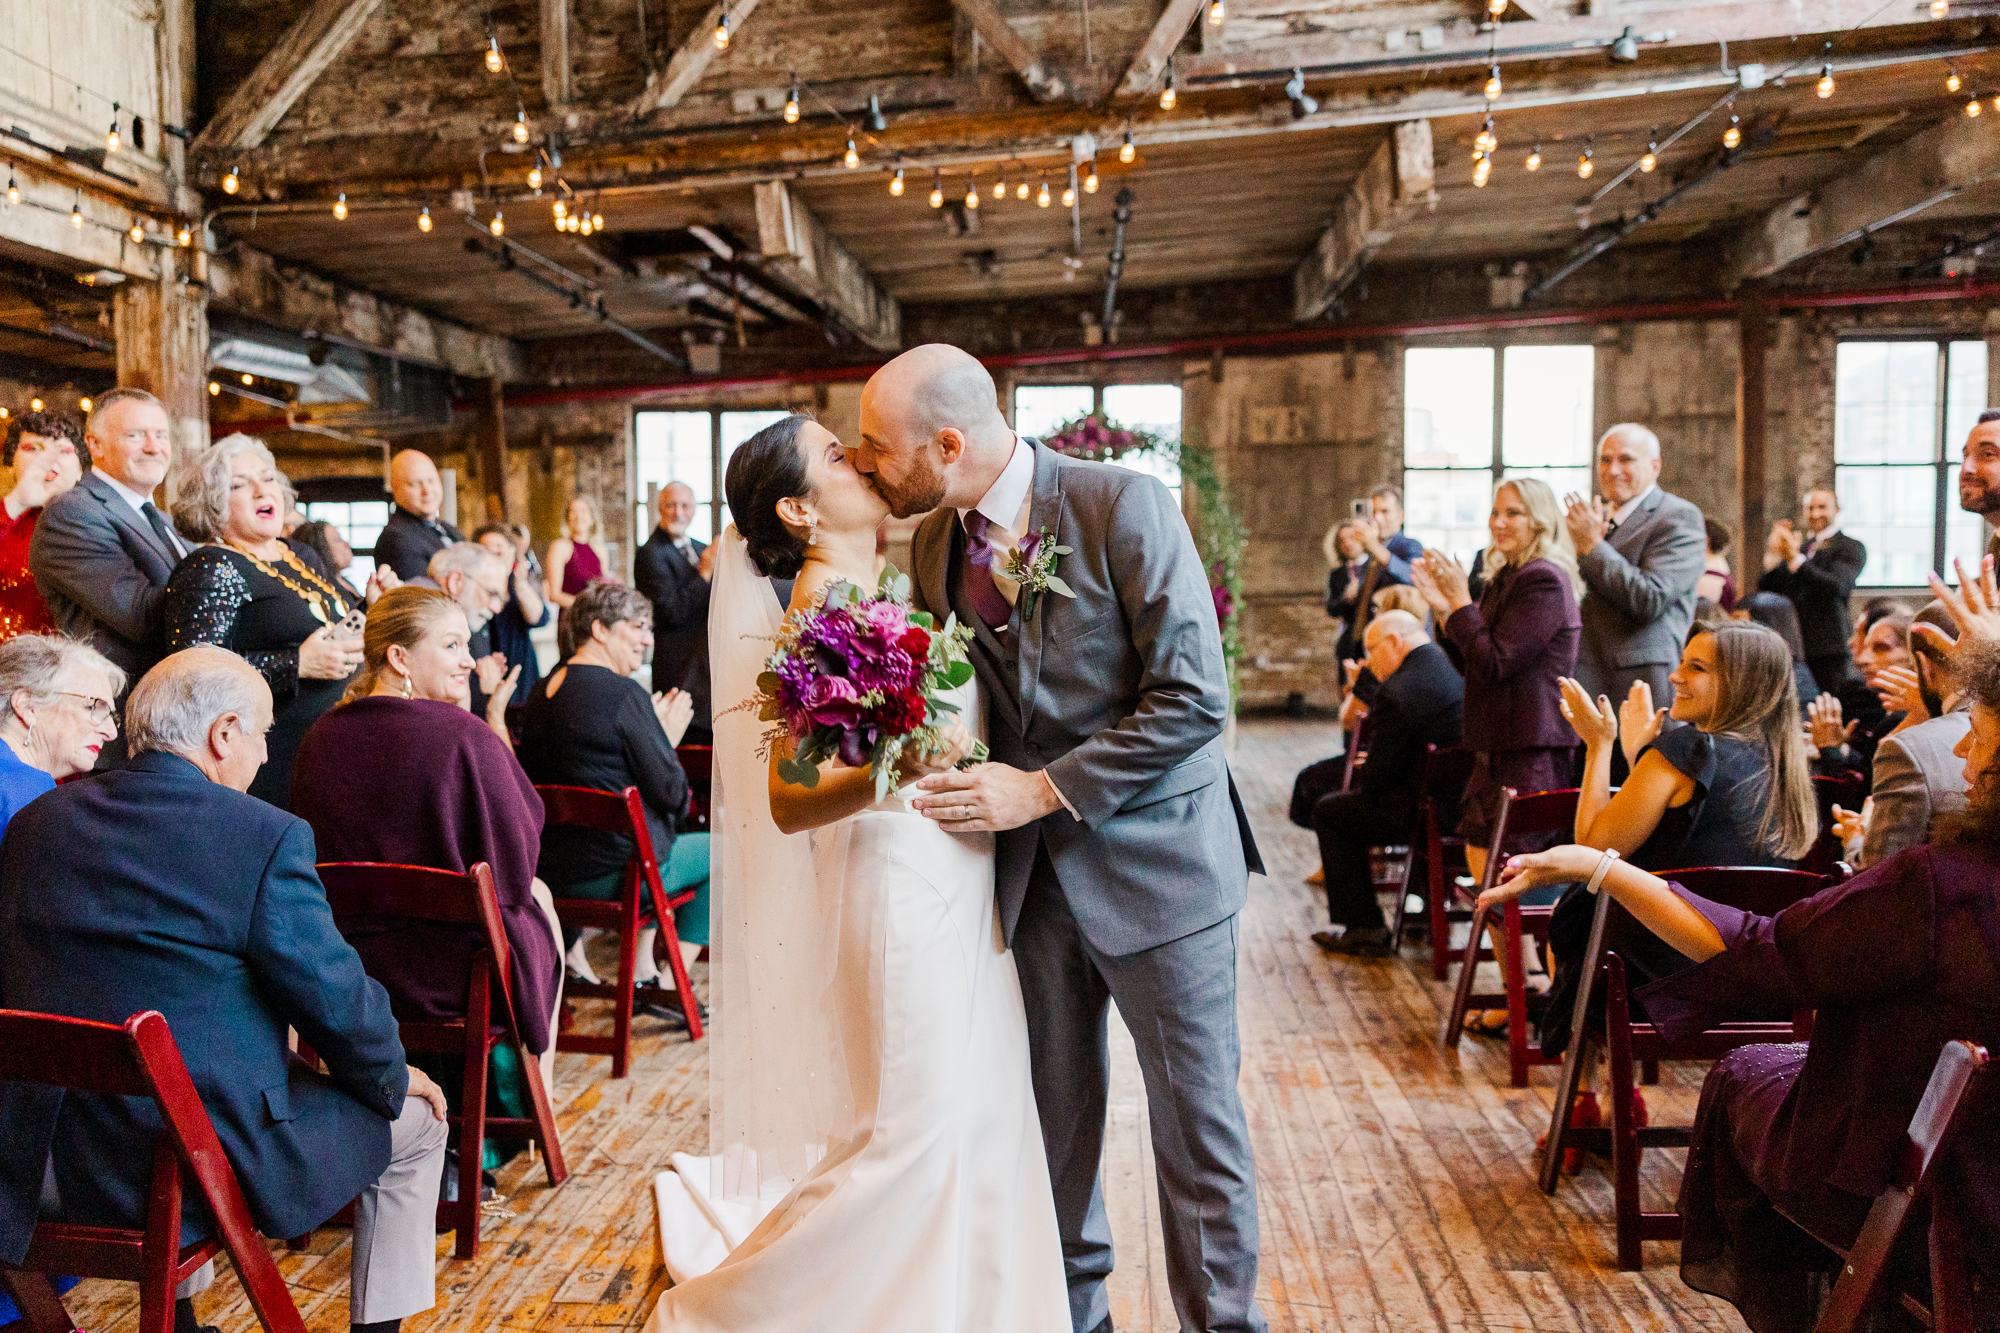 Magical Wedding Photos at Greenpoint Loft in Brooklyn